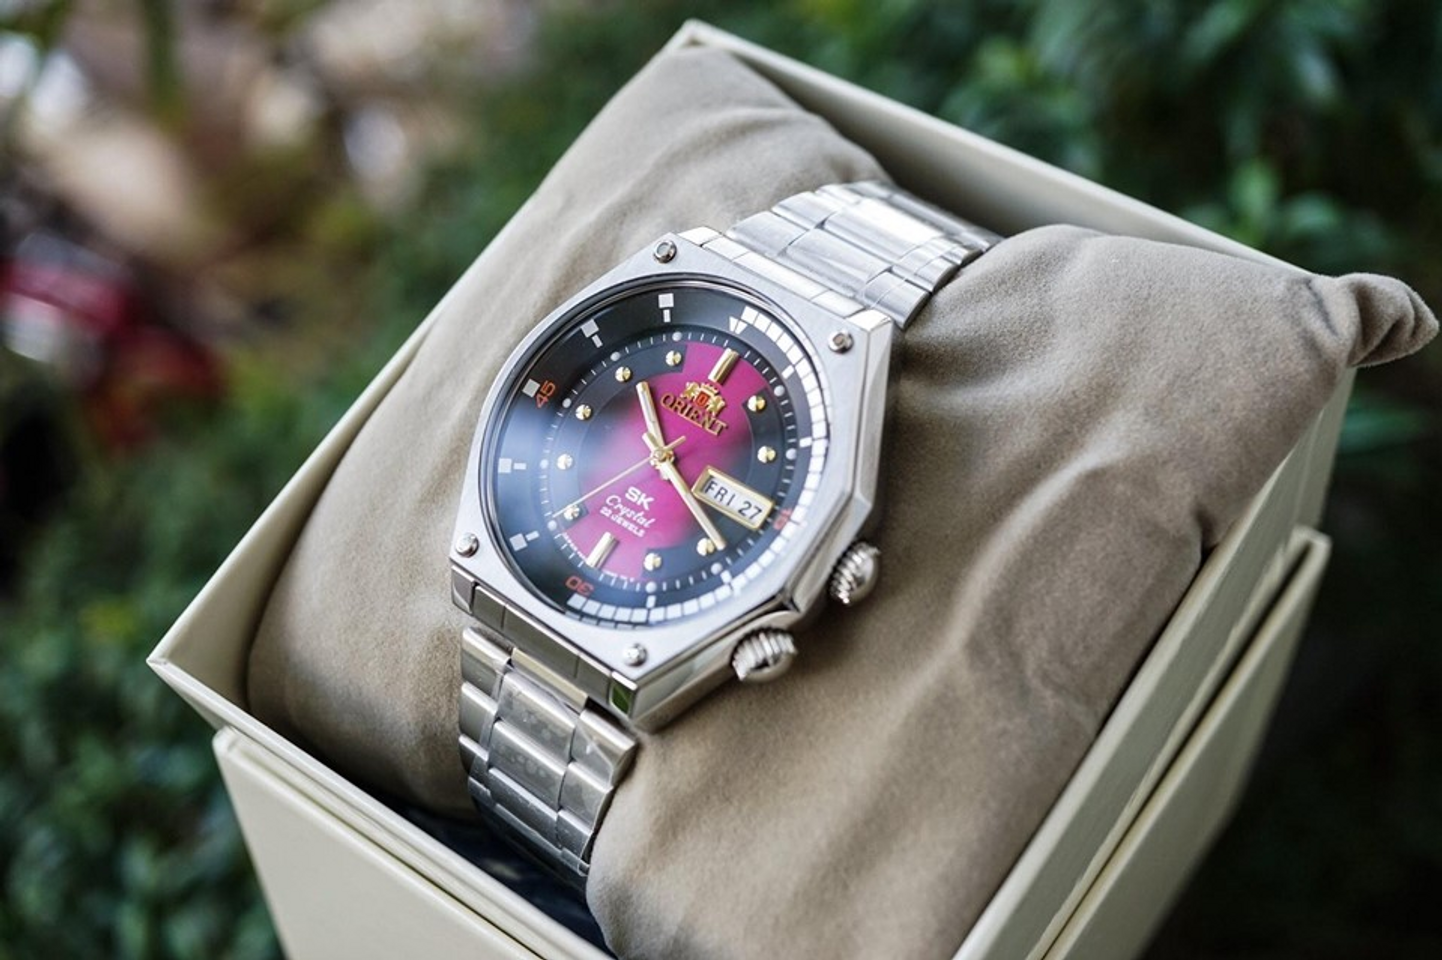 Đồng hồ Orient SK: 